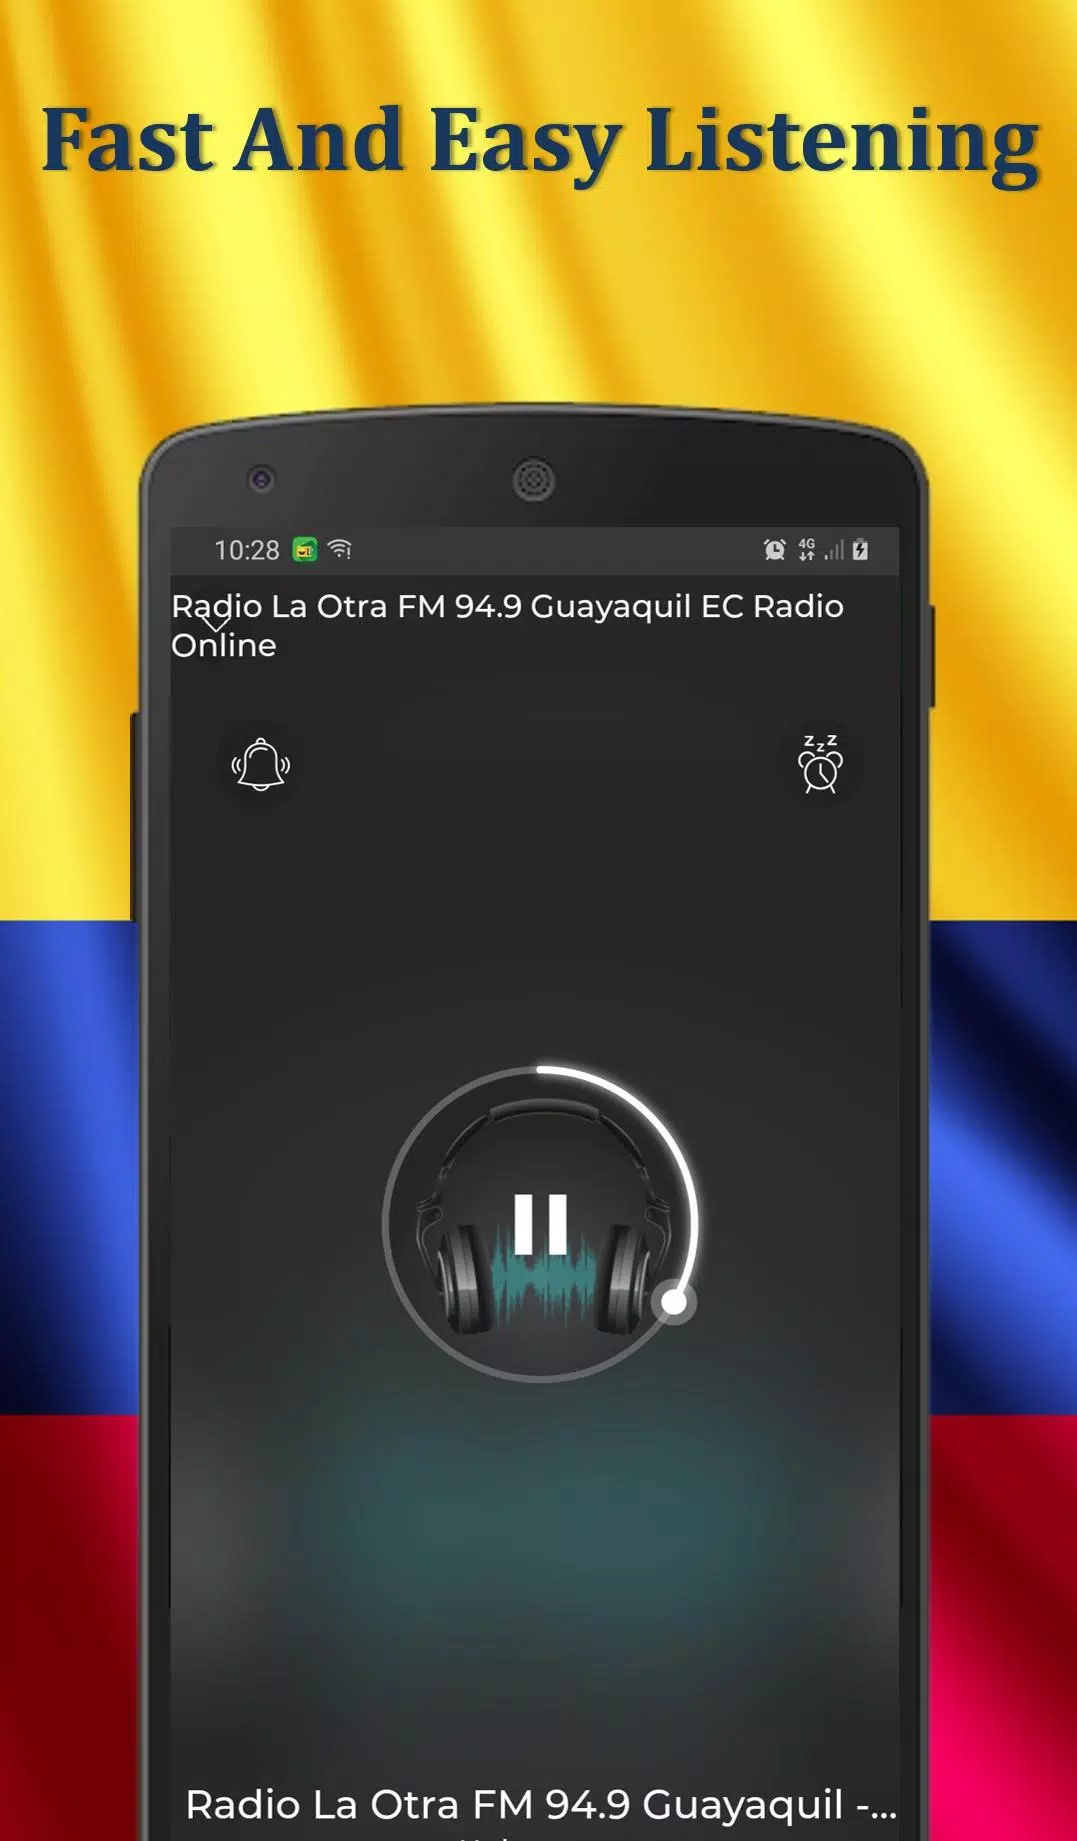 Radio La Otra FM 94.9 Guayaquil - EC Radio Online APK for Android Download